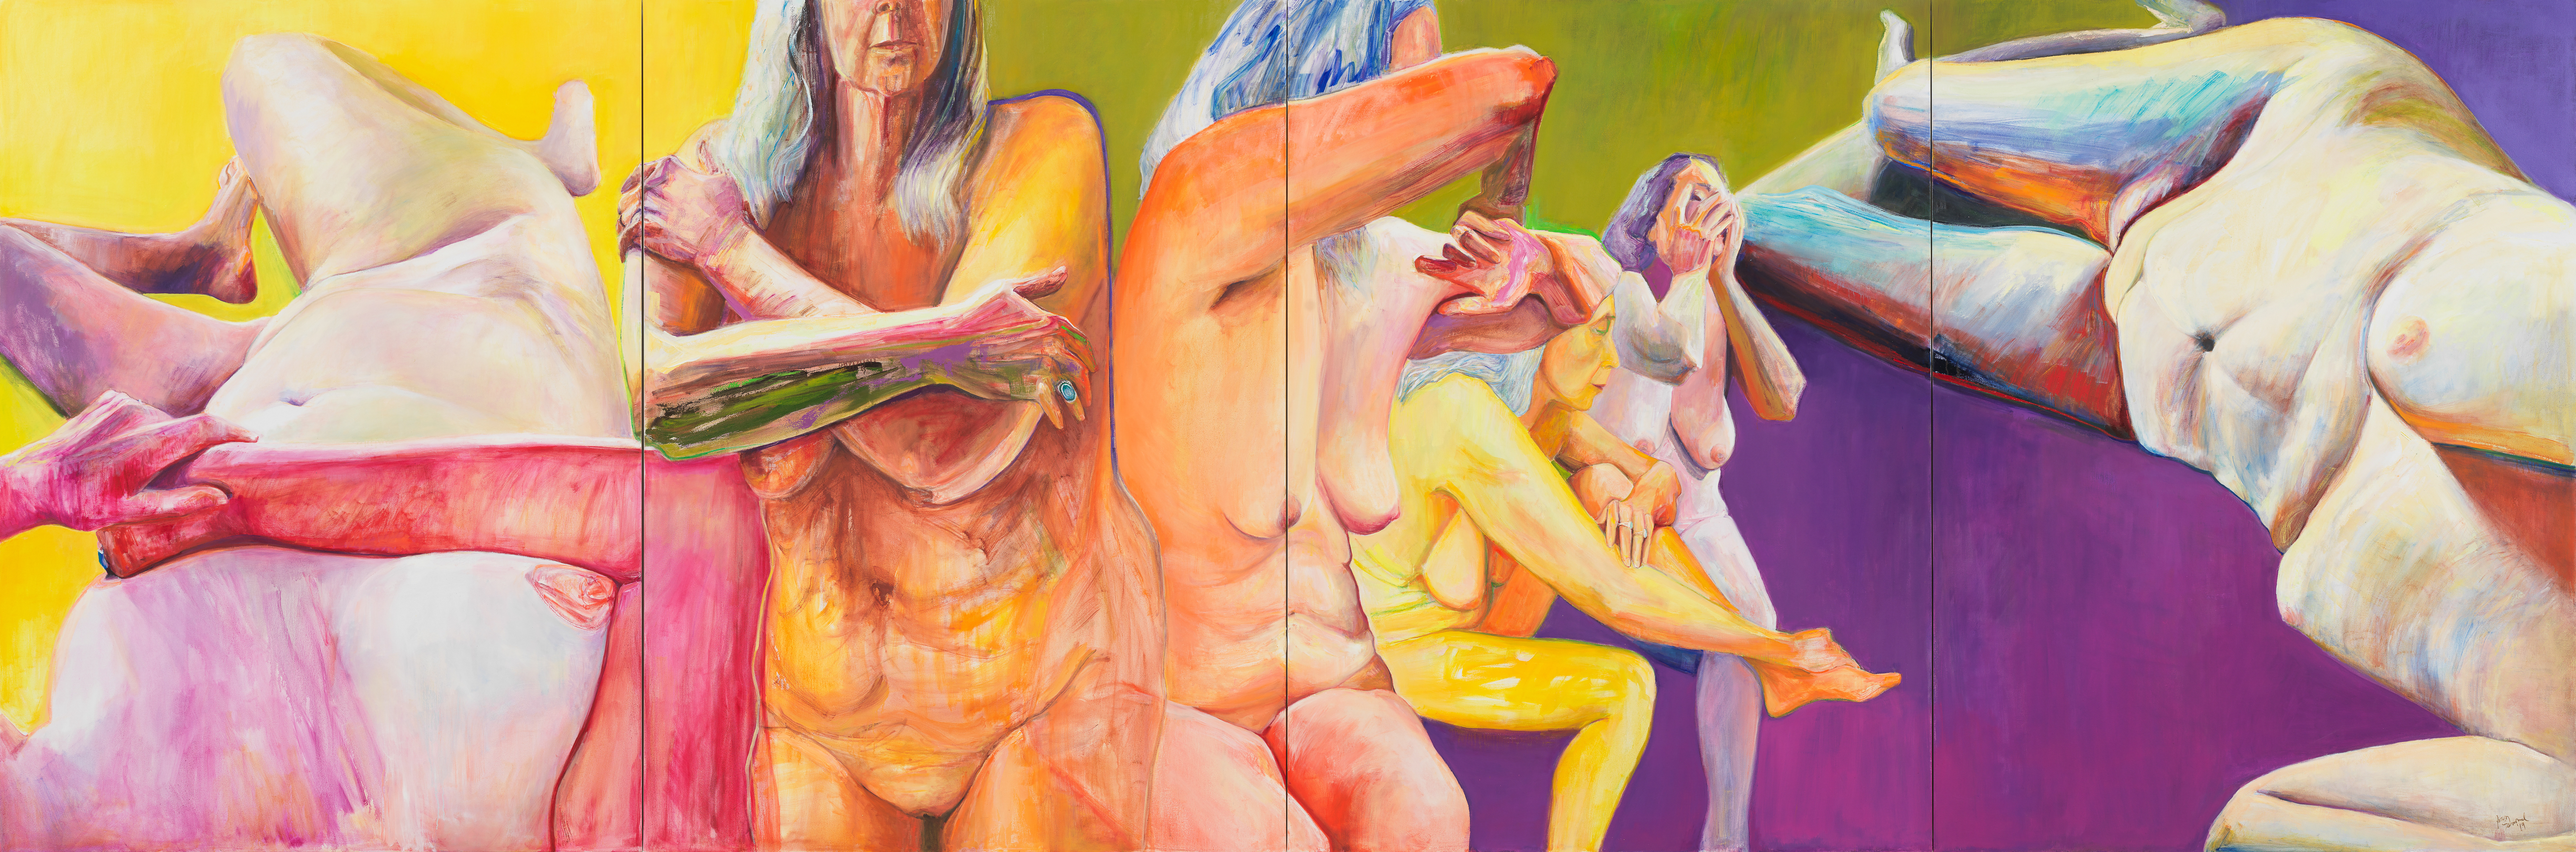 Joan Semmel Skin in the Game Oil on canvas 96 x 288 in